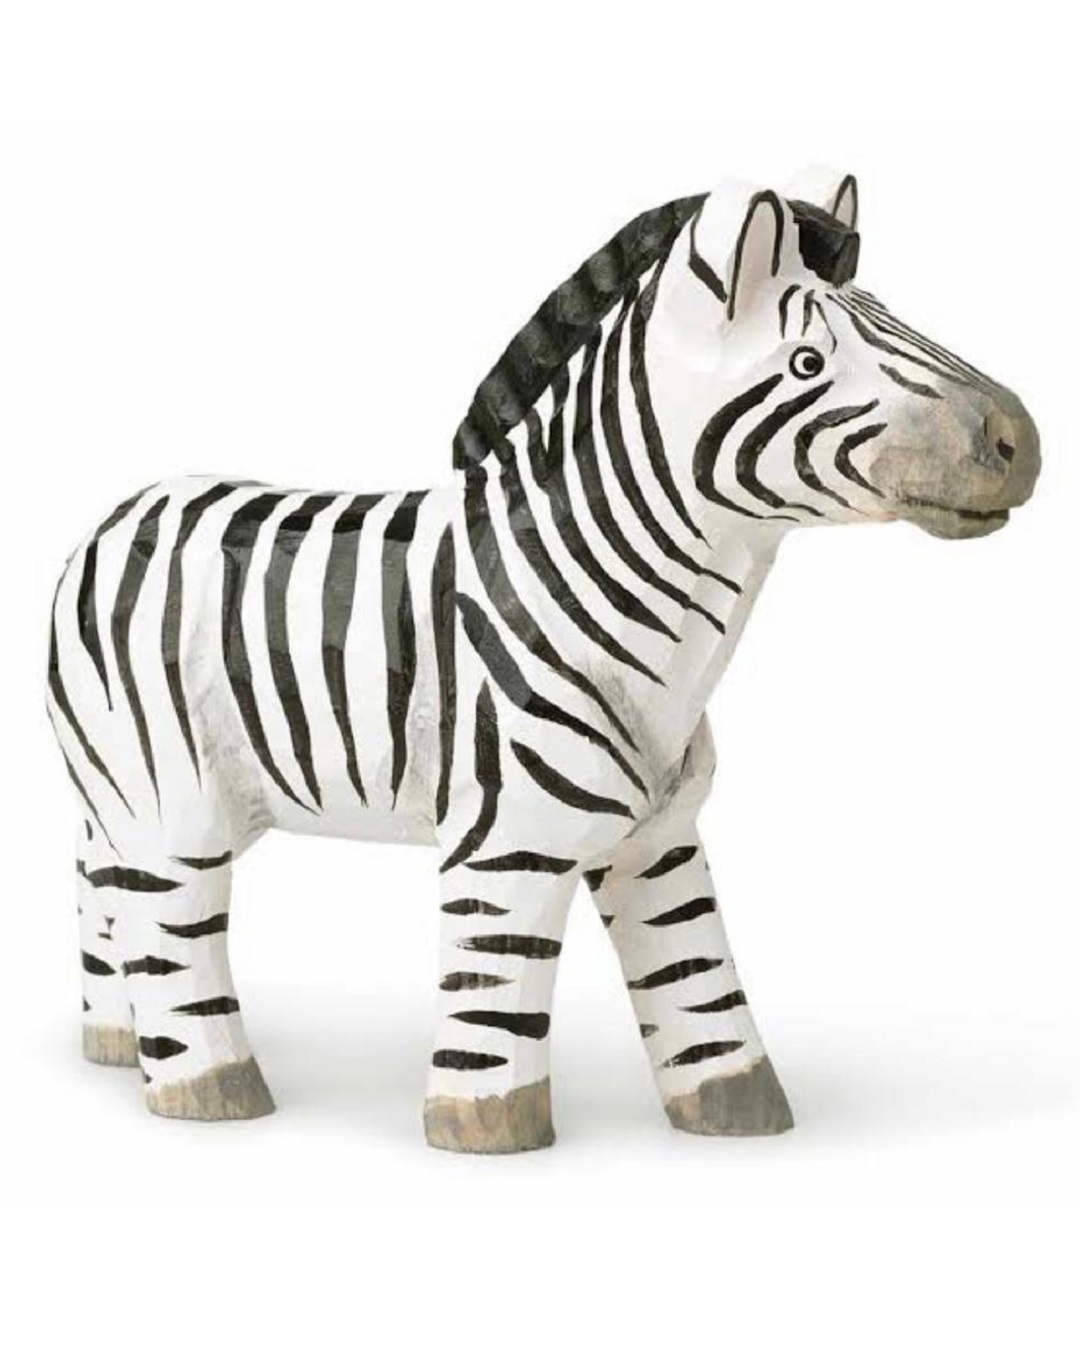 Hand carved Zebra statue